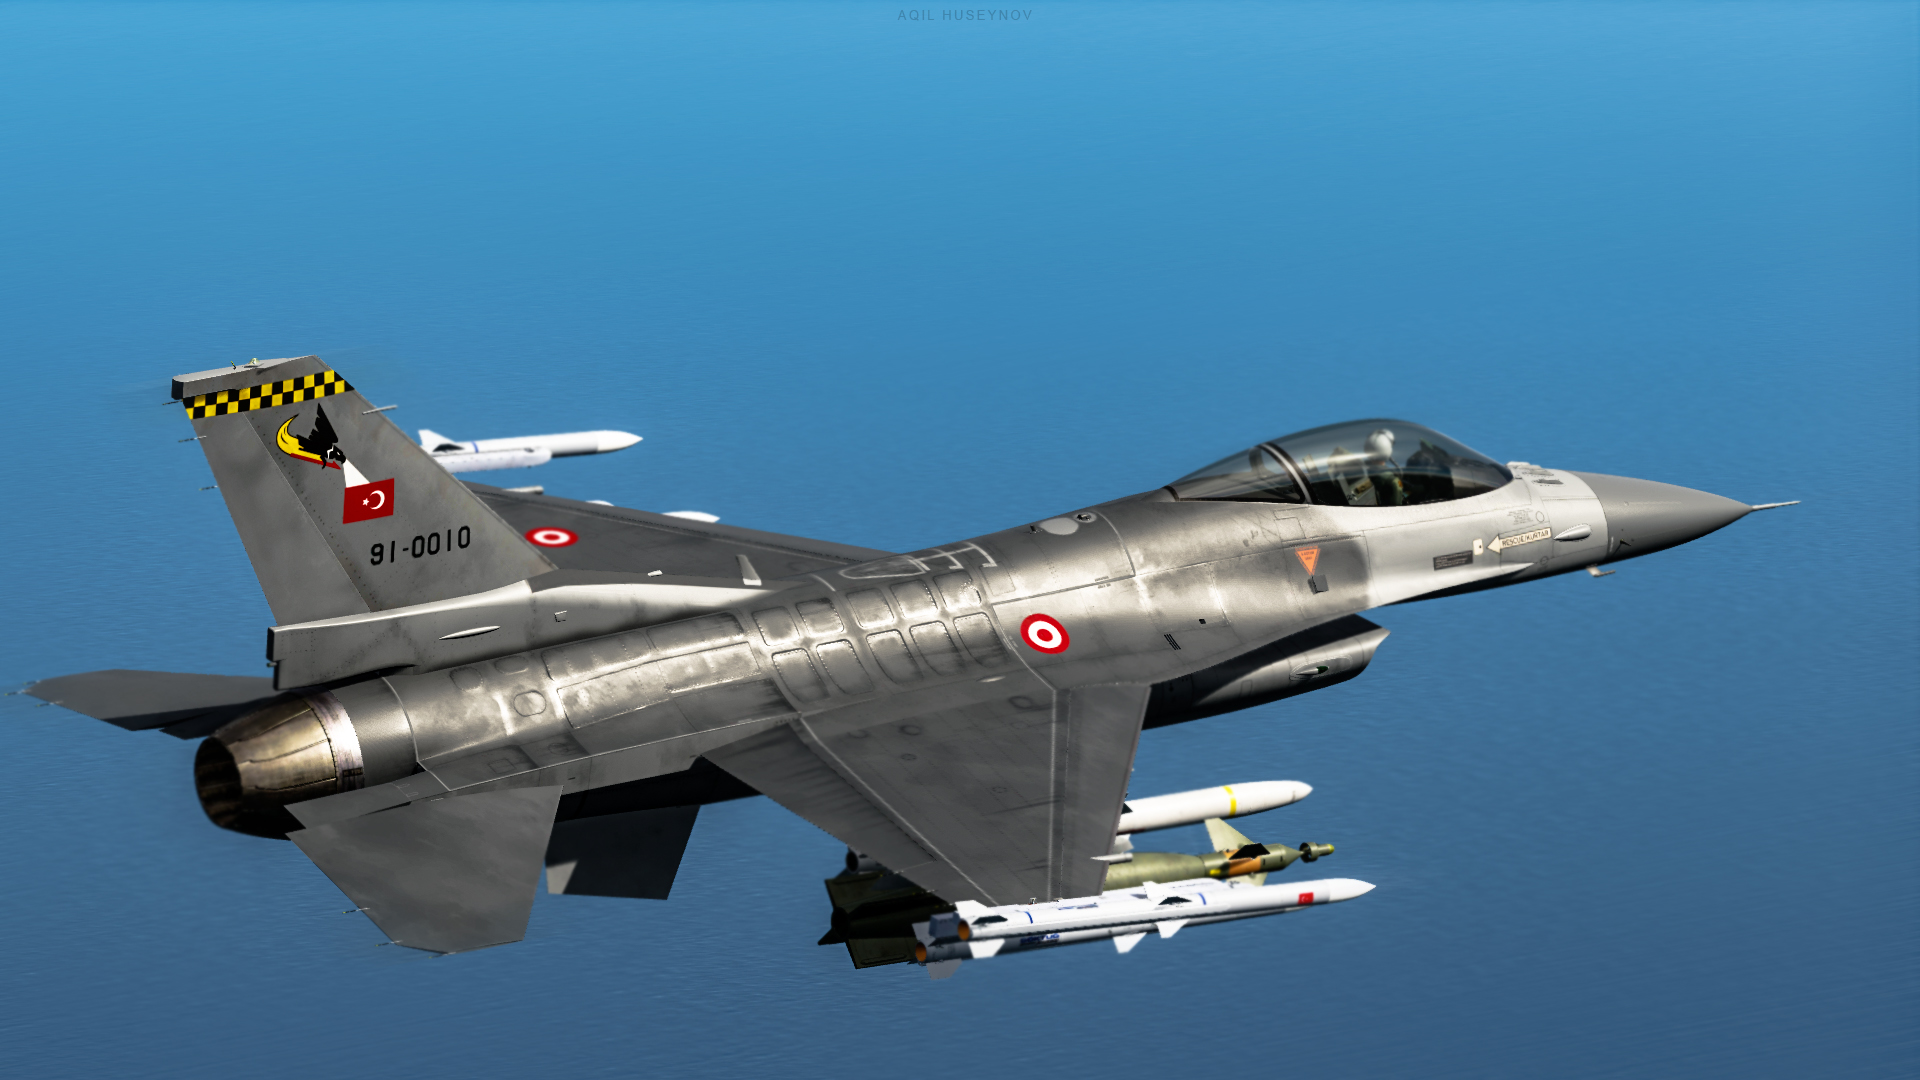 162. Zıpkın Turkish Air Force High resolution